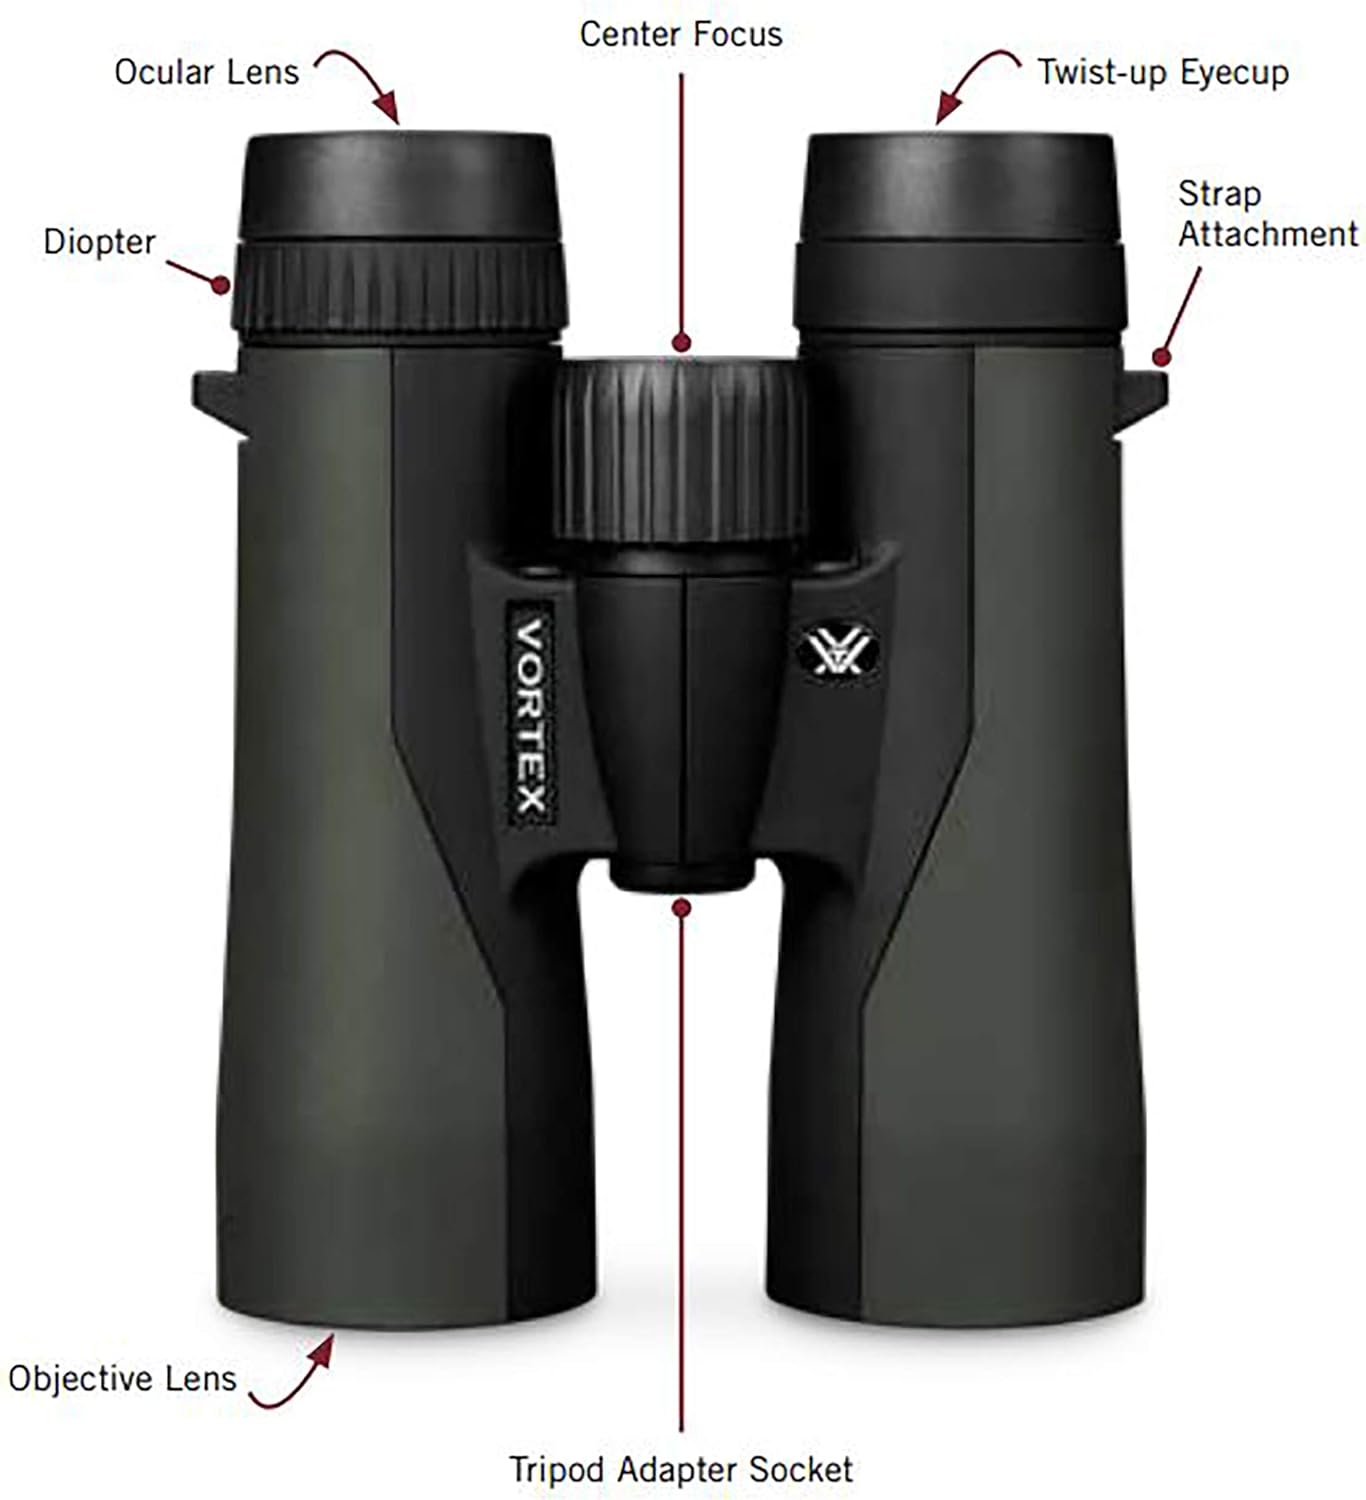 Vortex Optics Crossfire HD 10x42 Binoculars